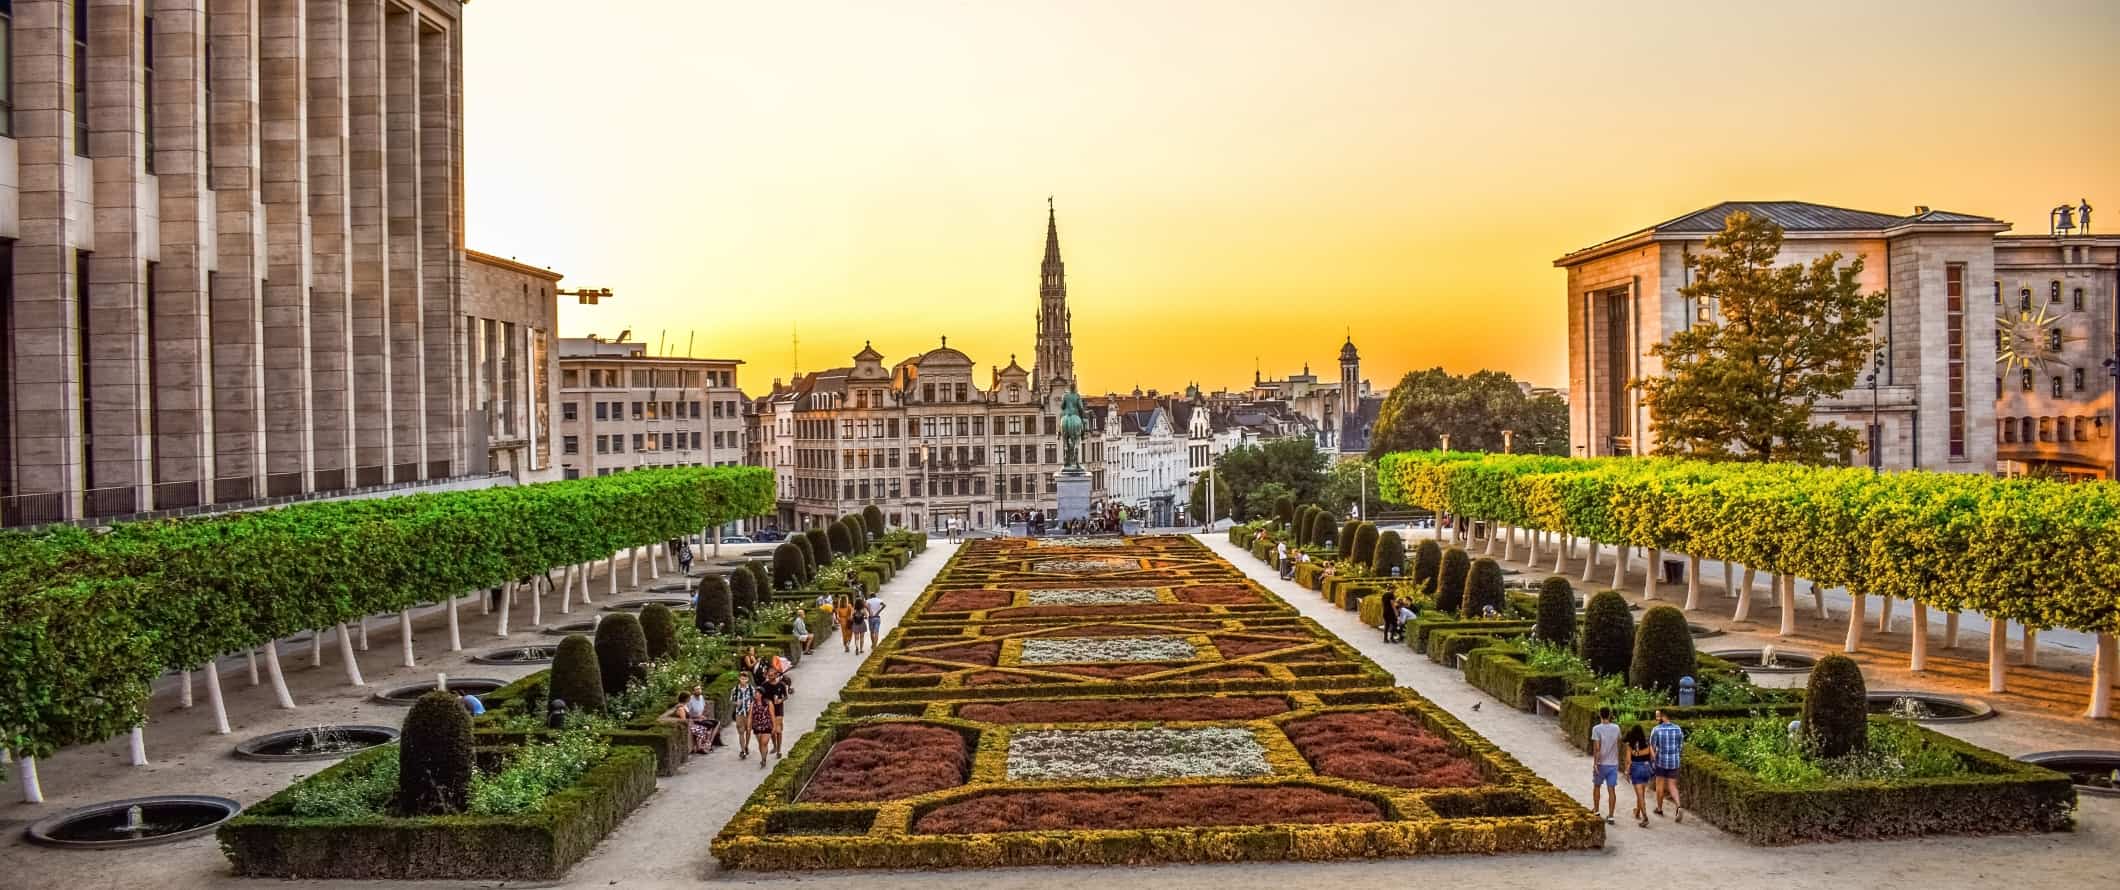 Manicured sprawling gardens in Brussels, Belgium